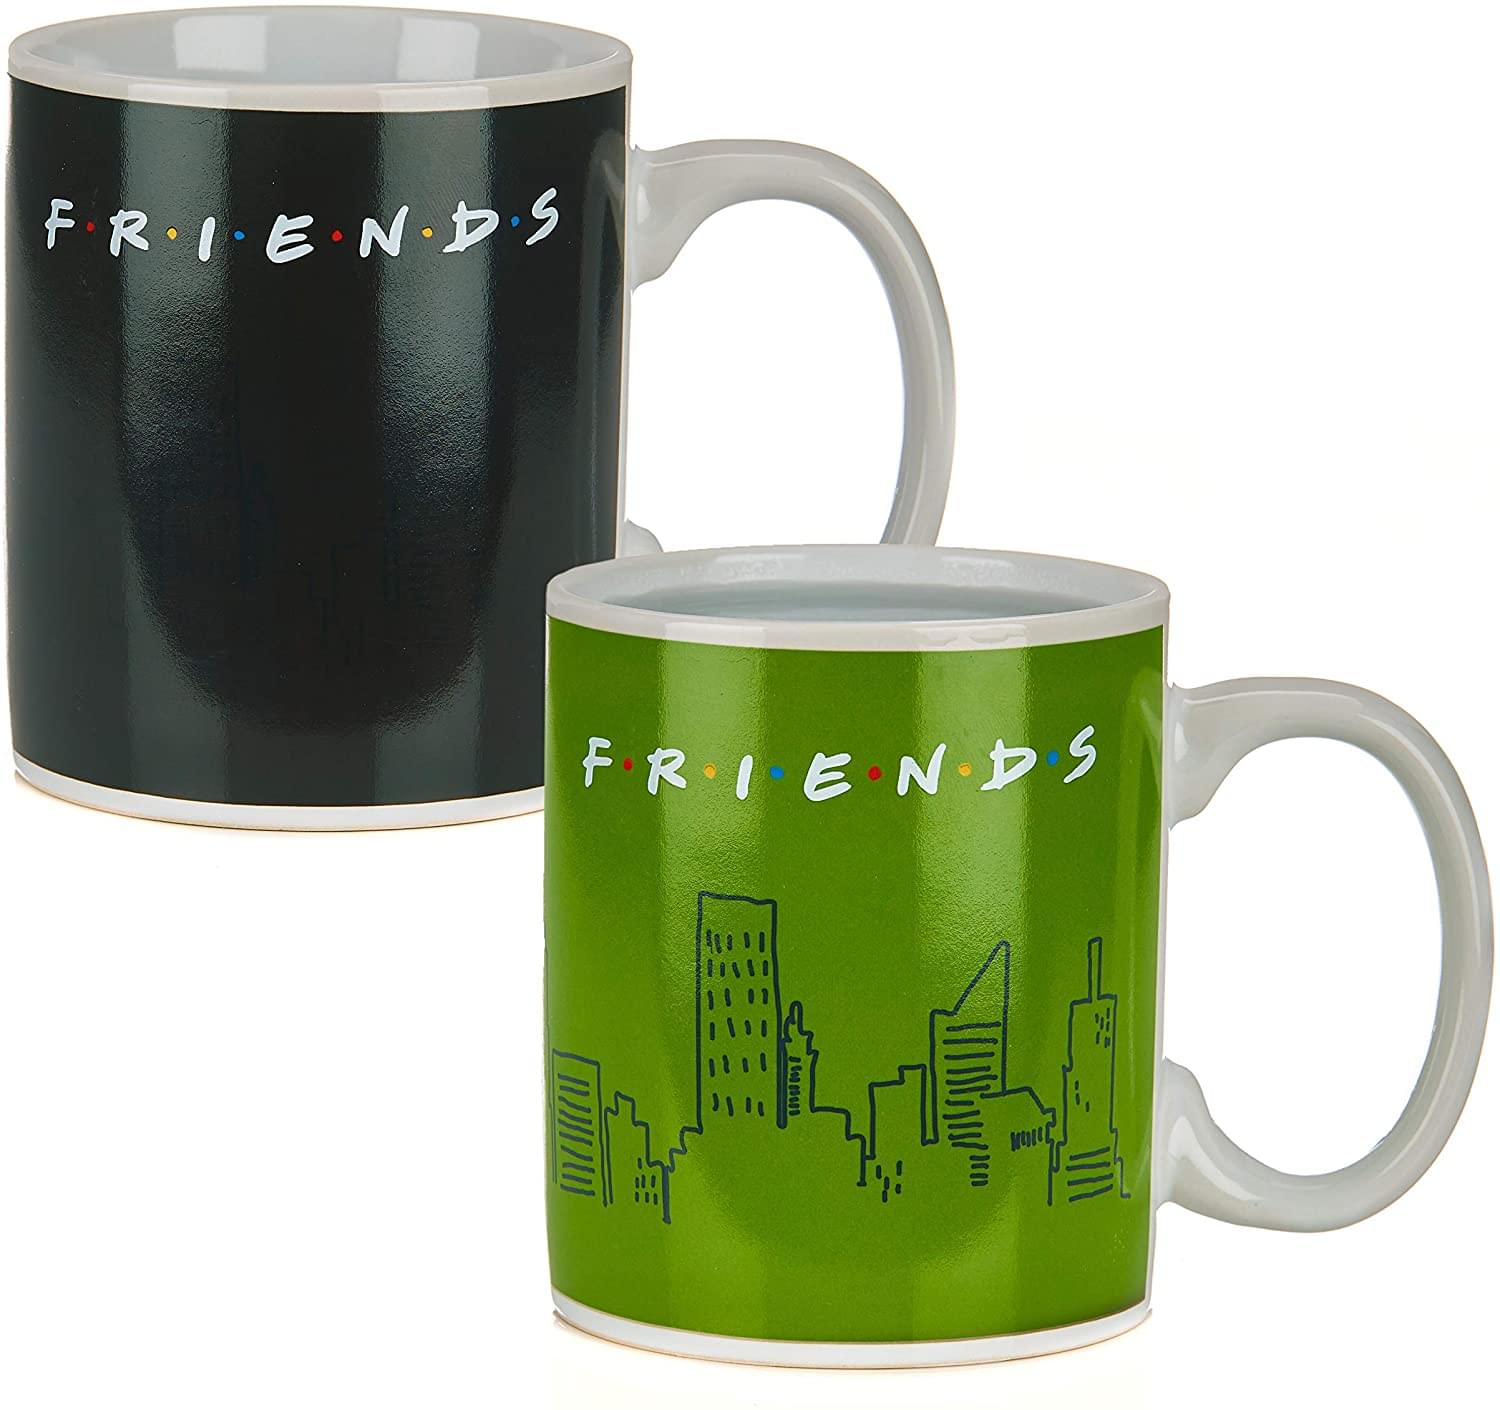 Friends How You Doin 10oz Heat Change Ceramic Mug